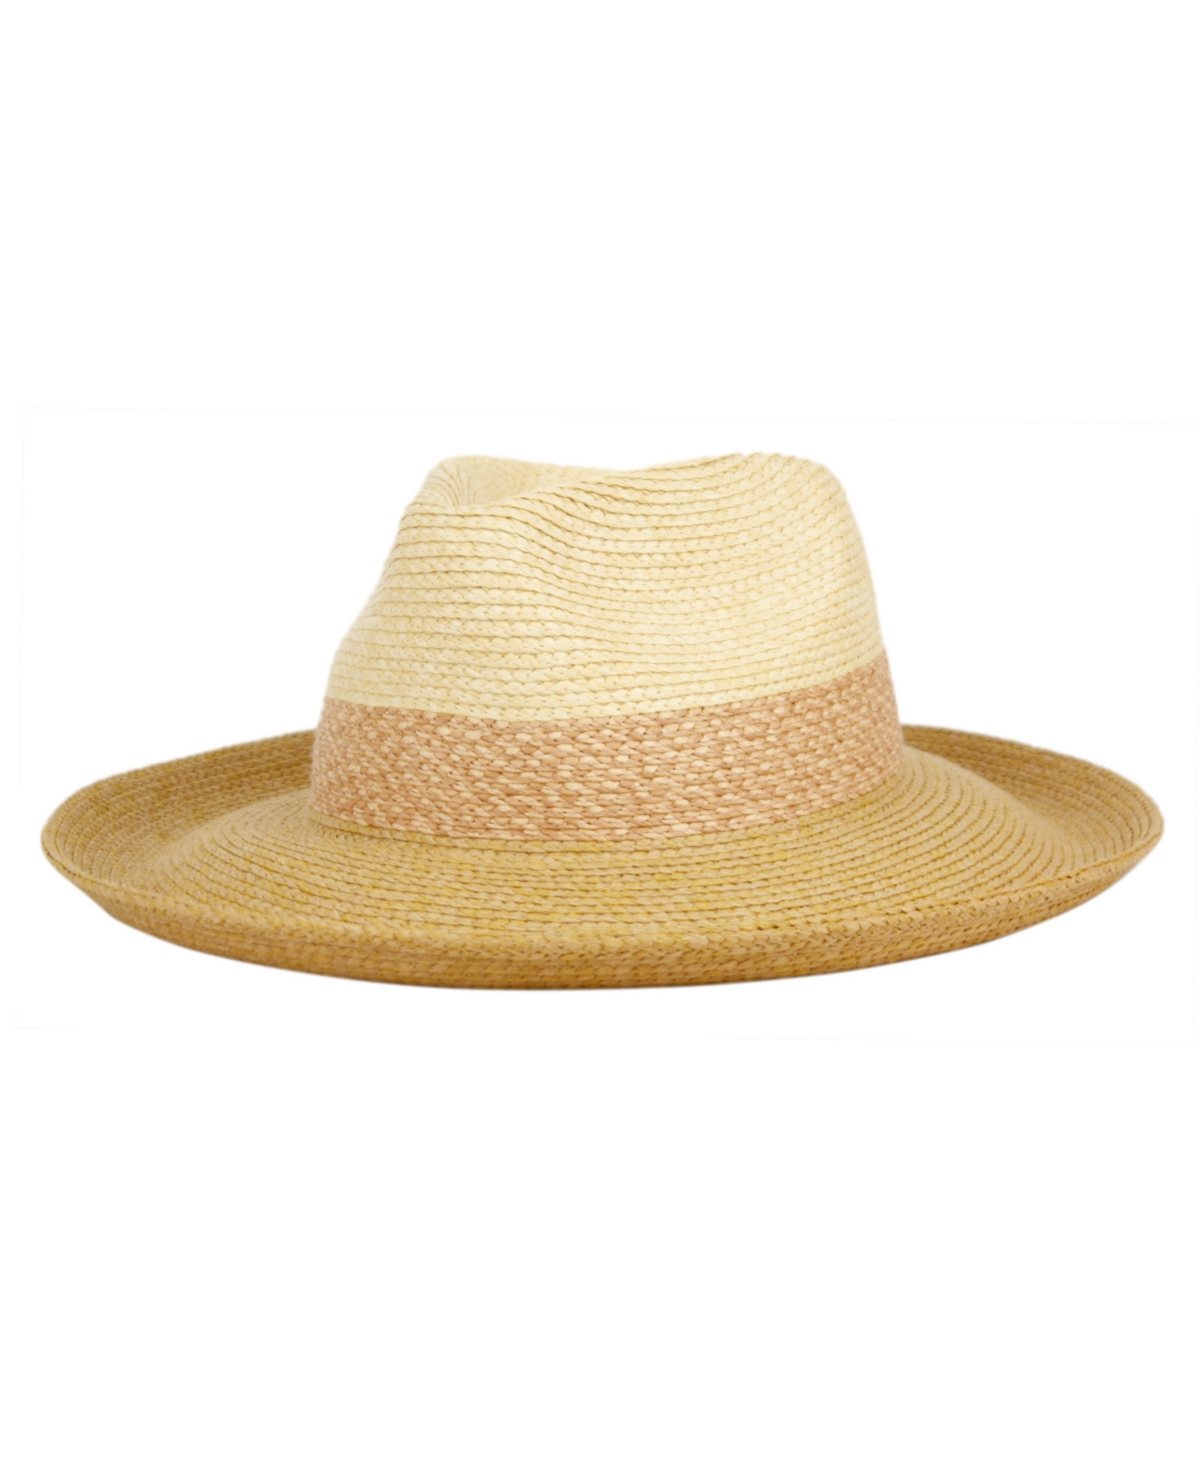 Up Brim Straw Fedora Sun Hat - Natural